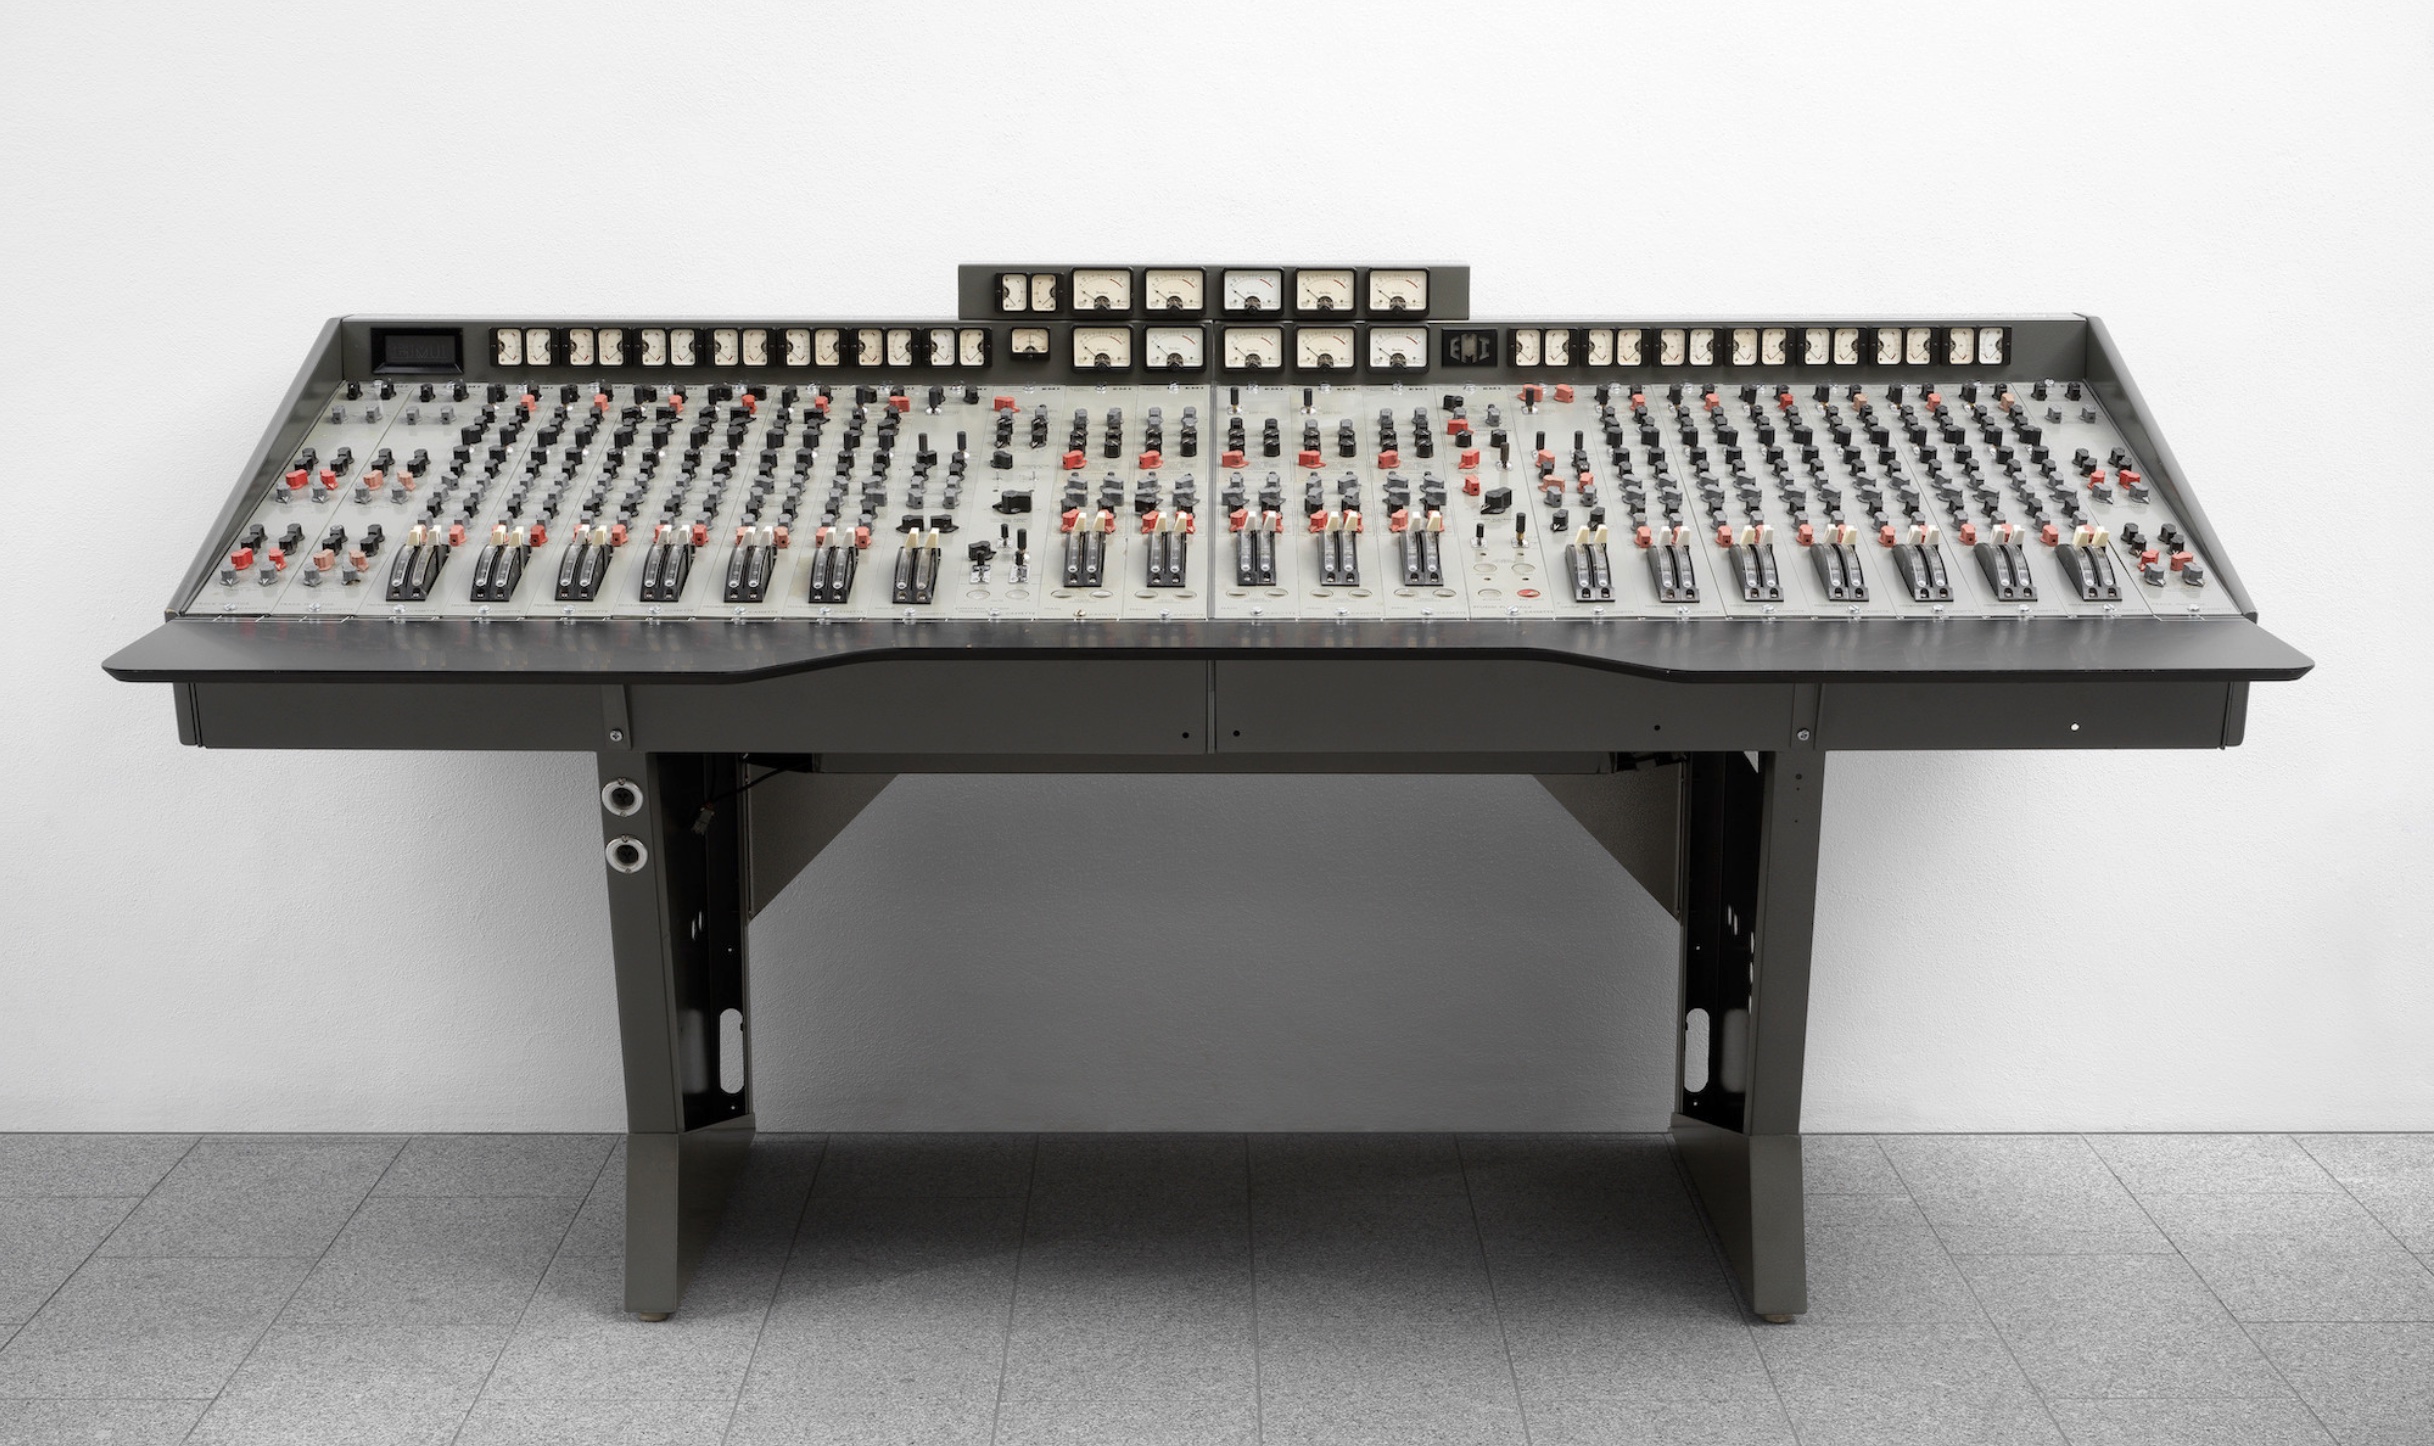 Abbey Road studio console at Bonhams – Antique Collecting